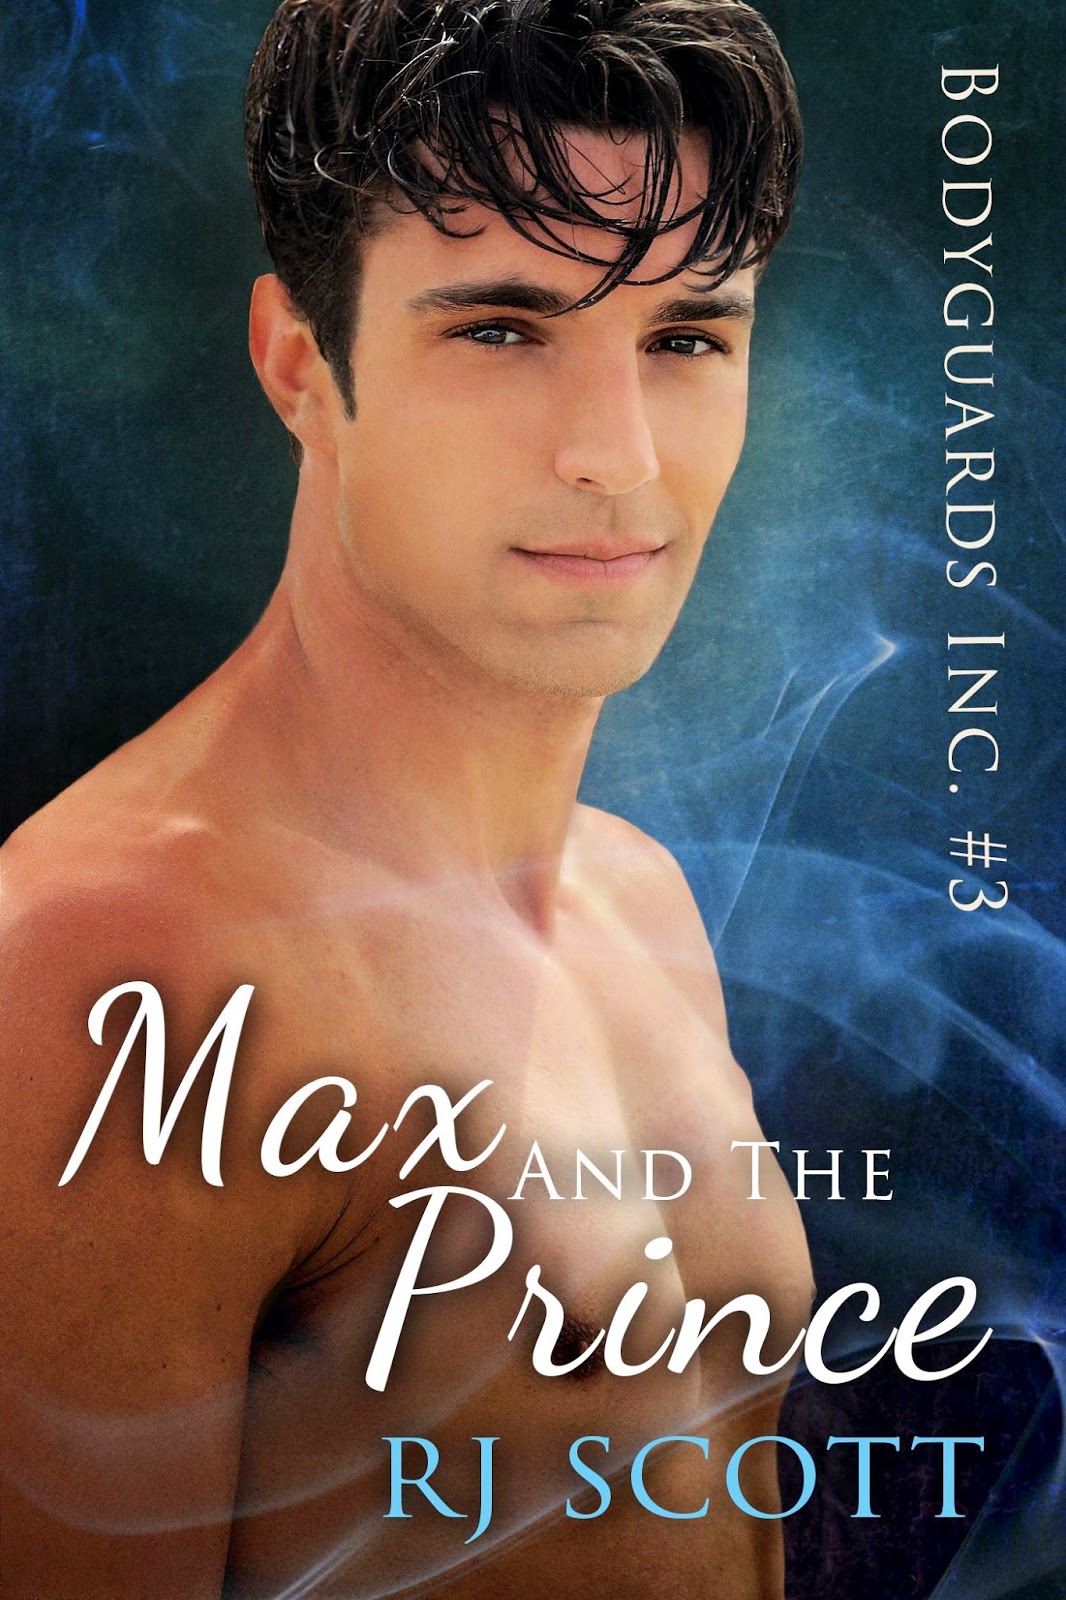 Max and the prince MM romance RJ Scott